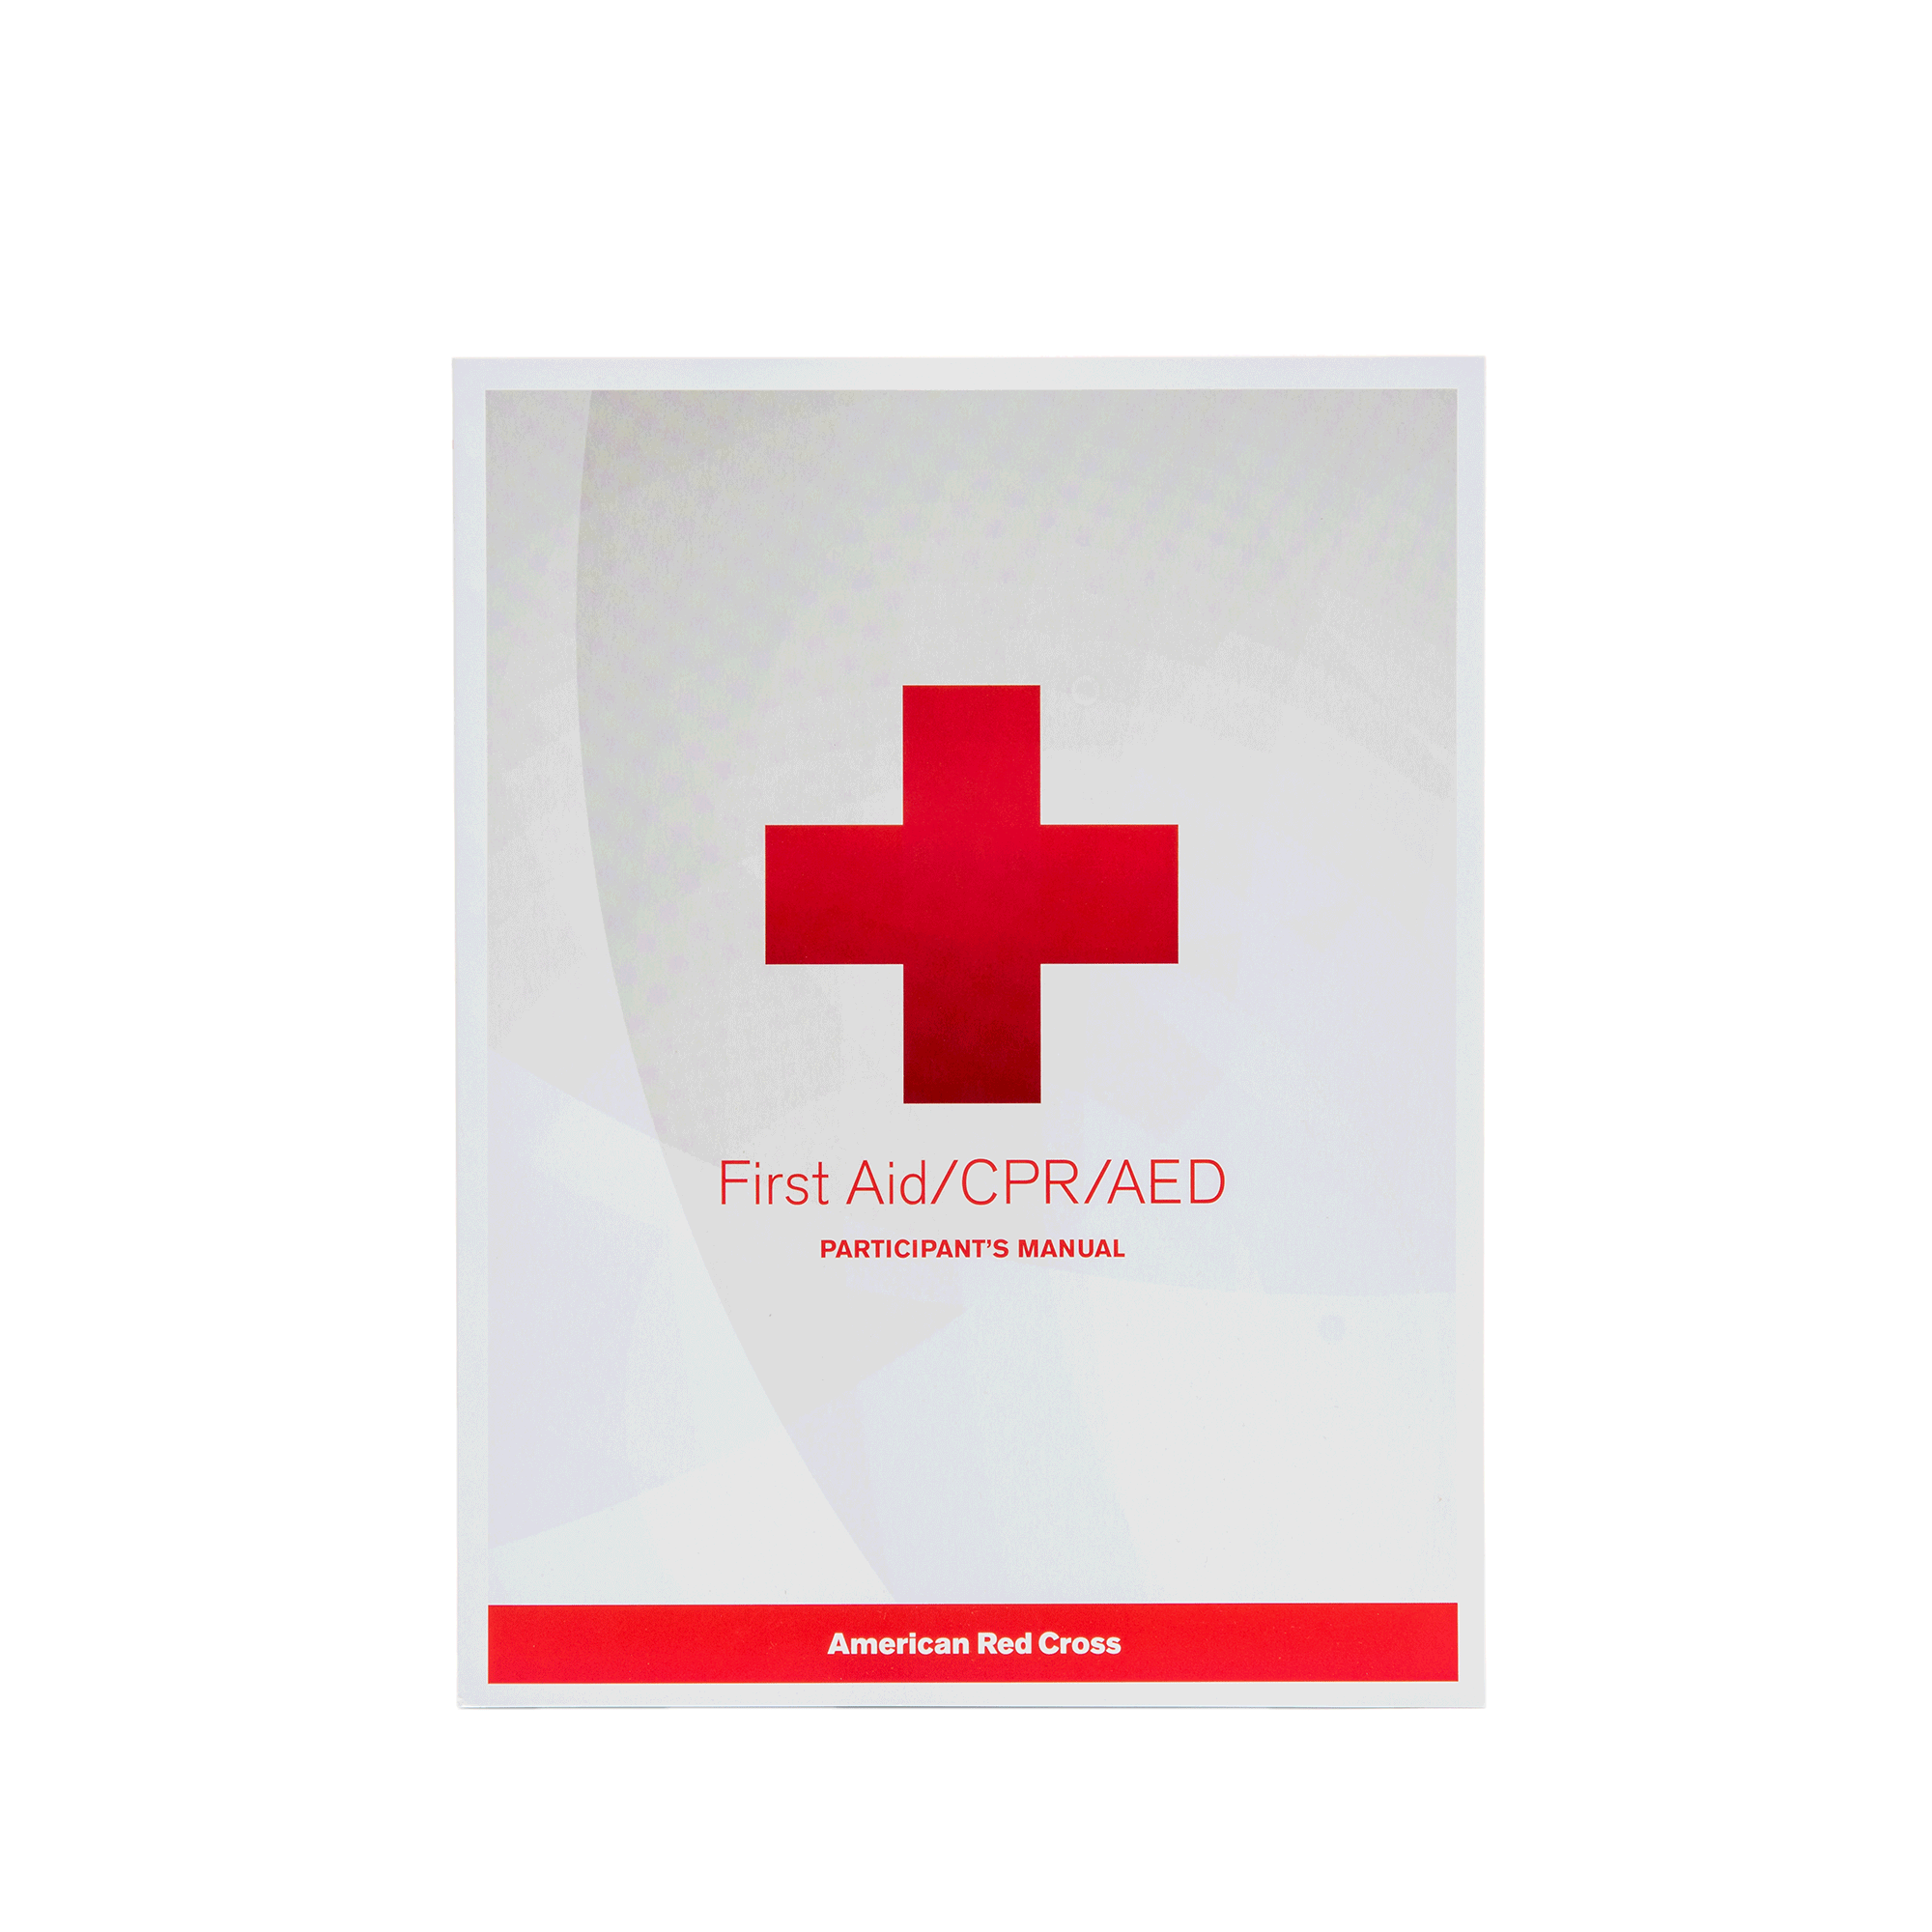 first aid manual